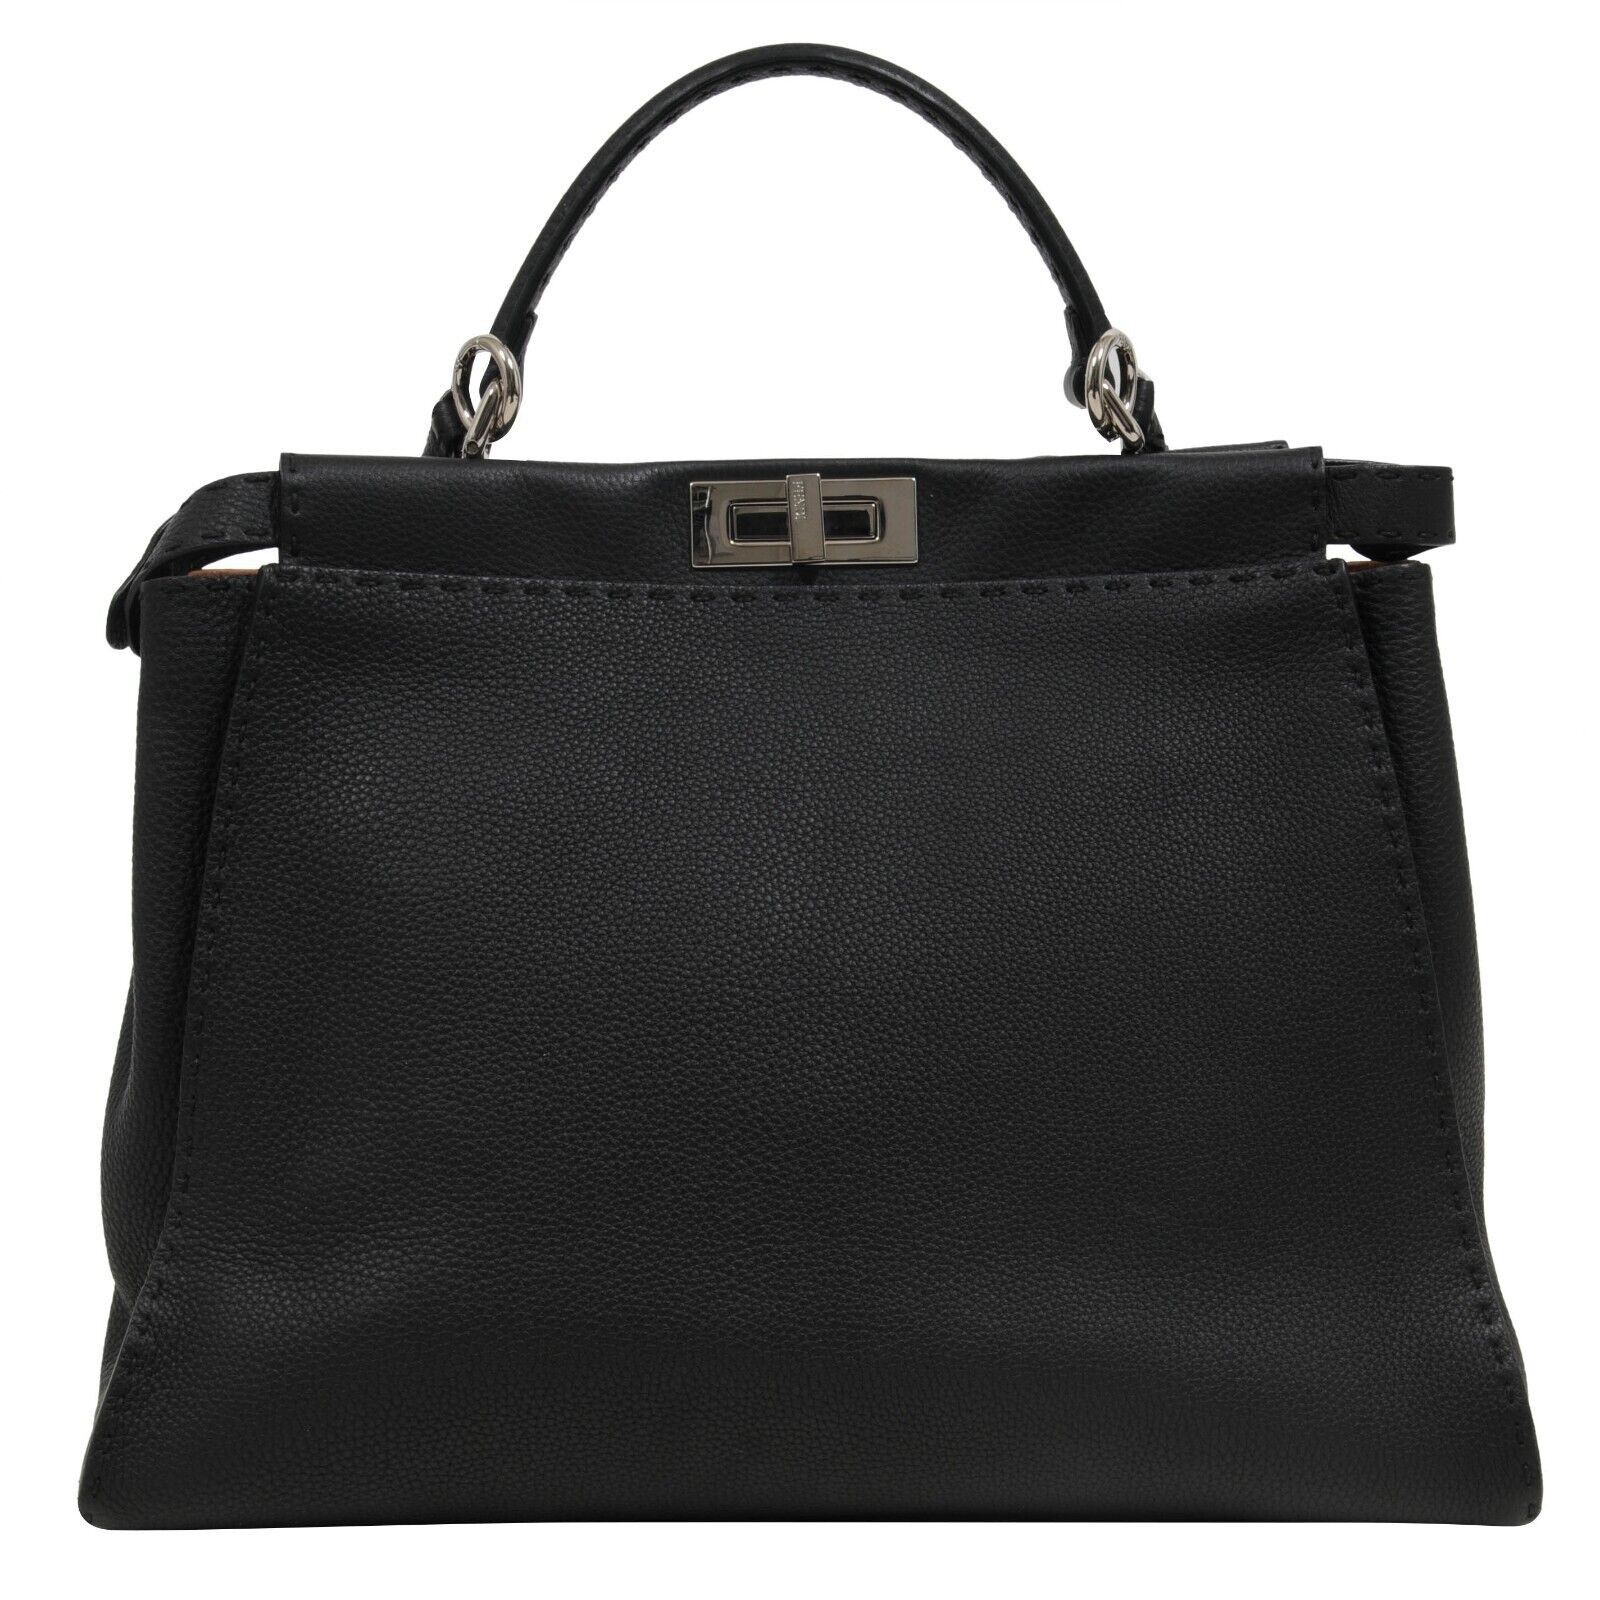 Fendi Peekaboo Satchel Tote Large Black Leather Shoulder Bag Size ONE SIZE - 2 Preview